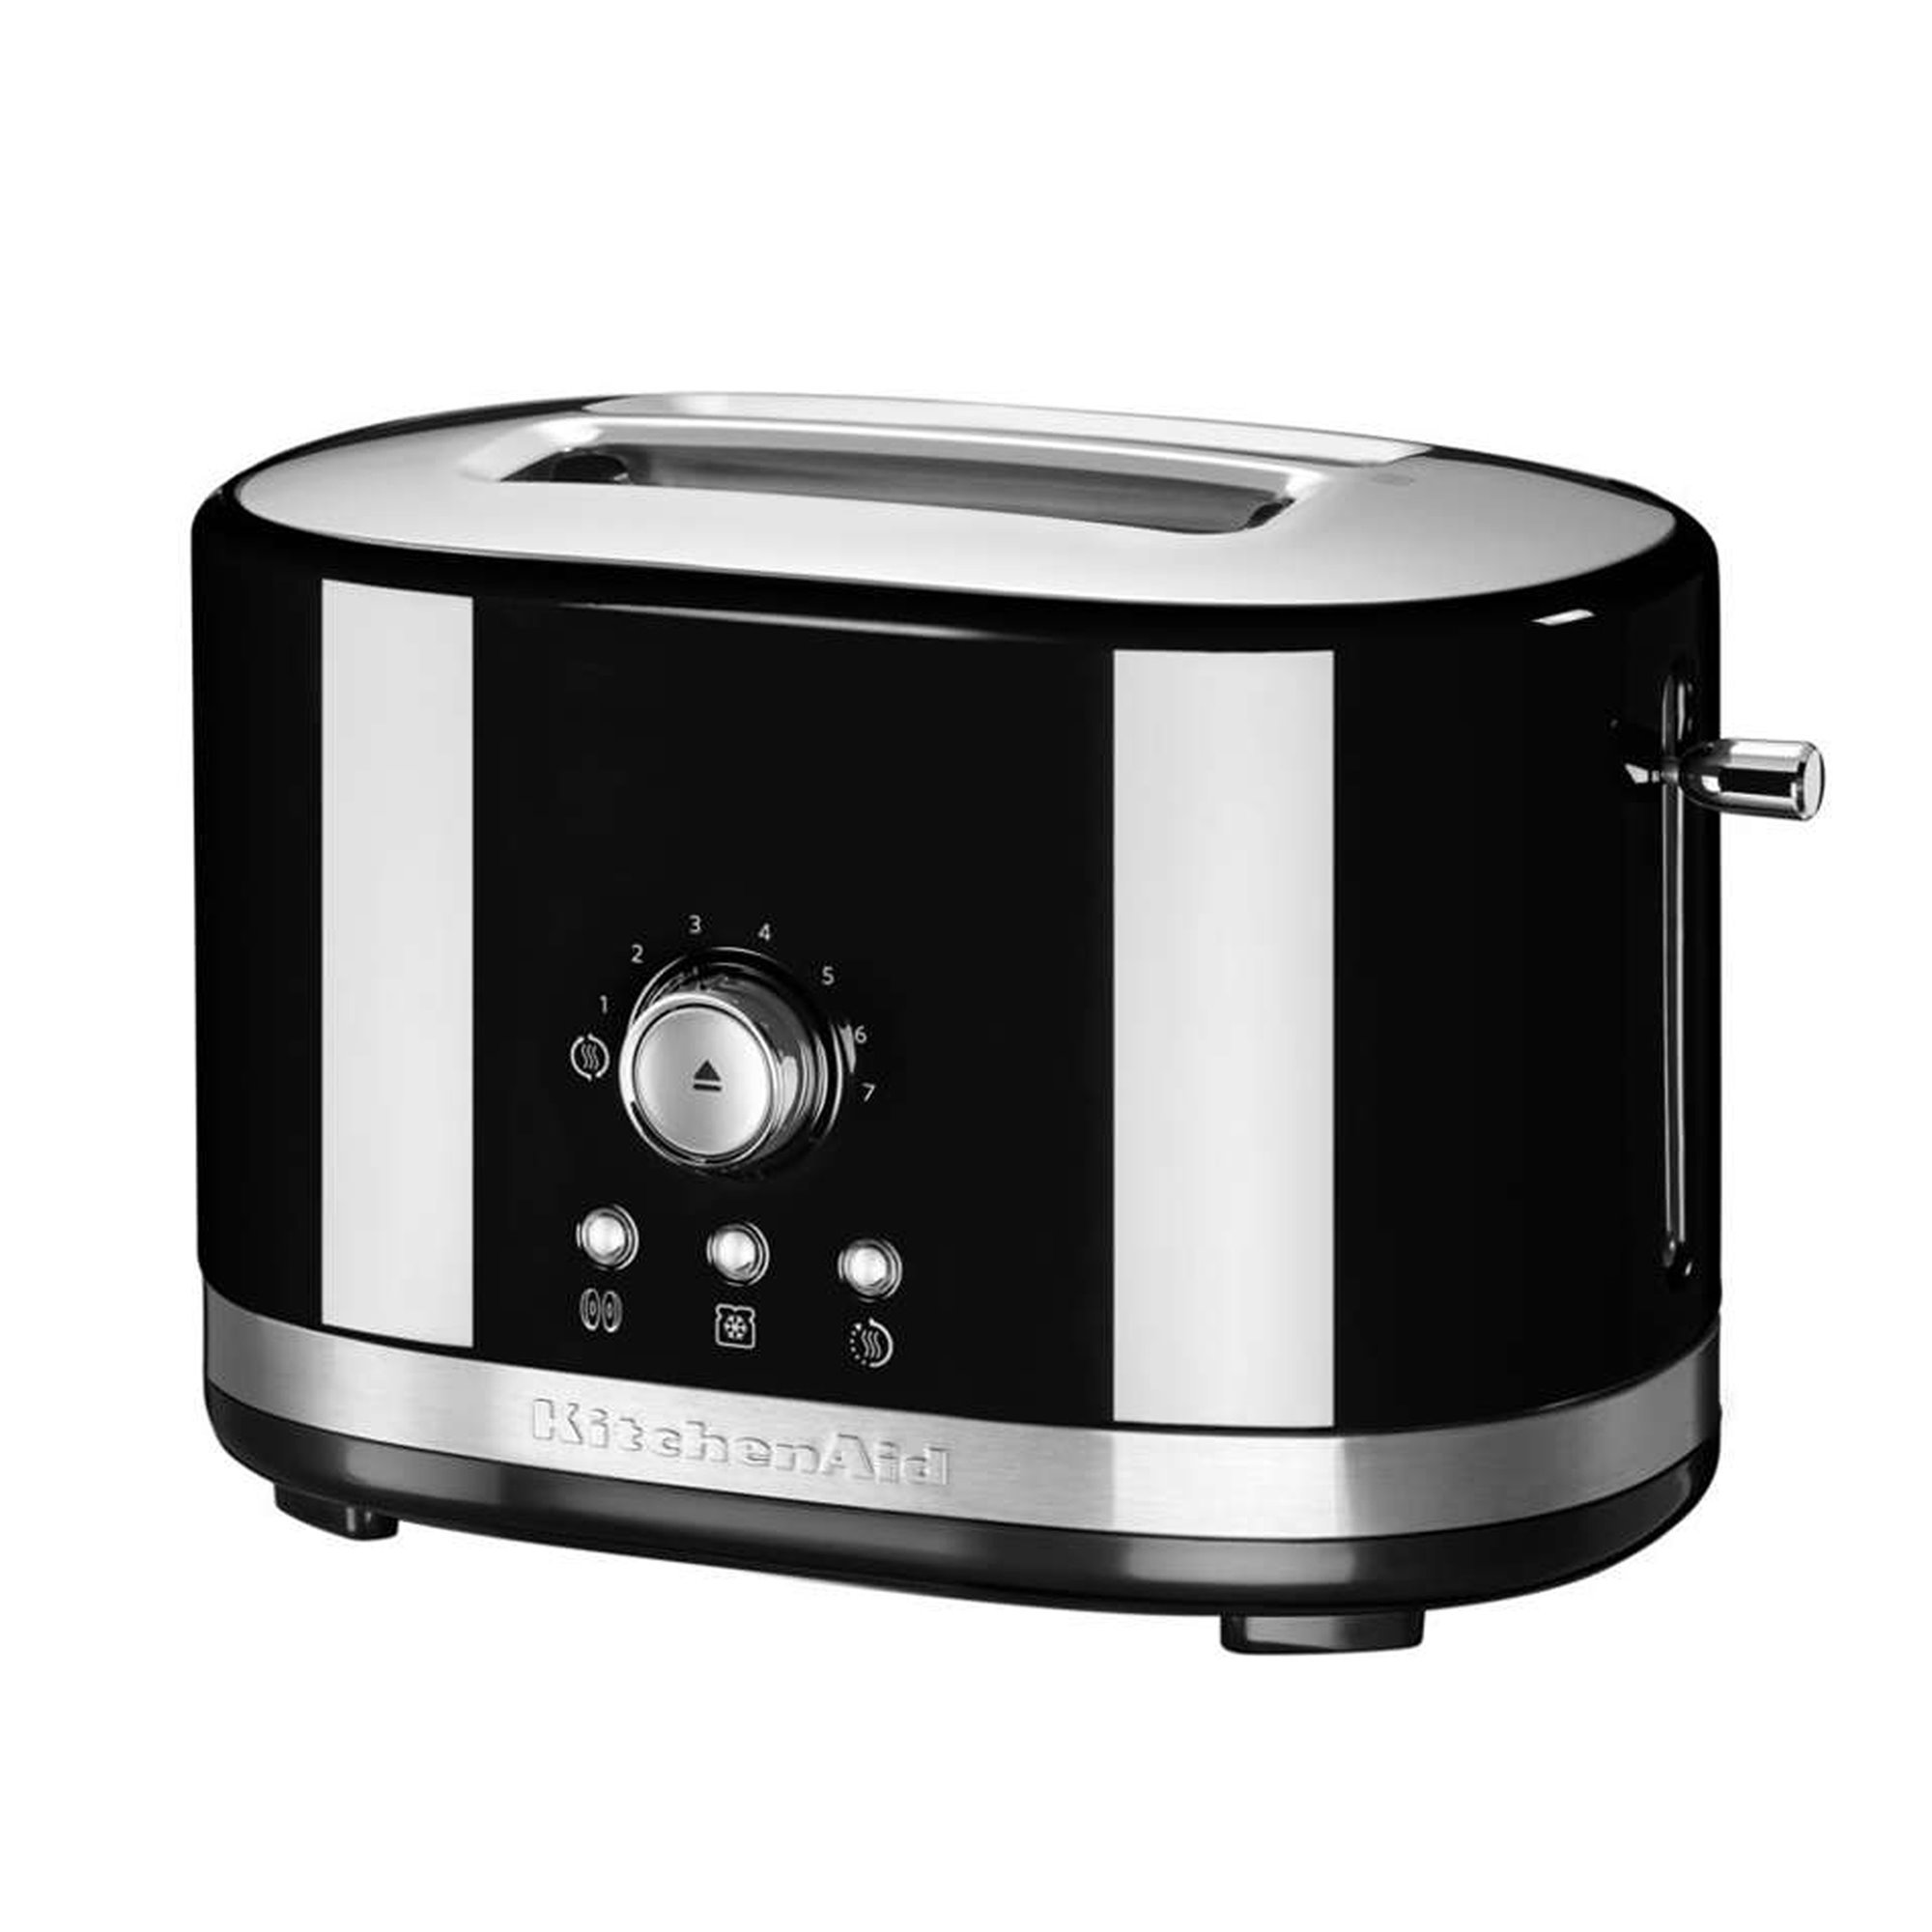 2-slot toaster, manual control, 1200W, Black" color - KitchenAid | KitchenShop